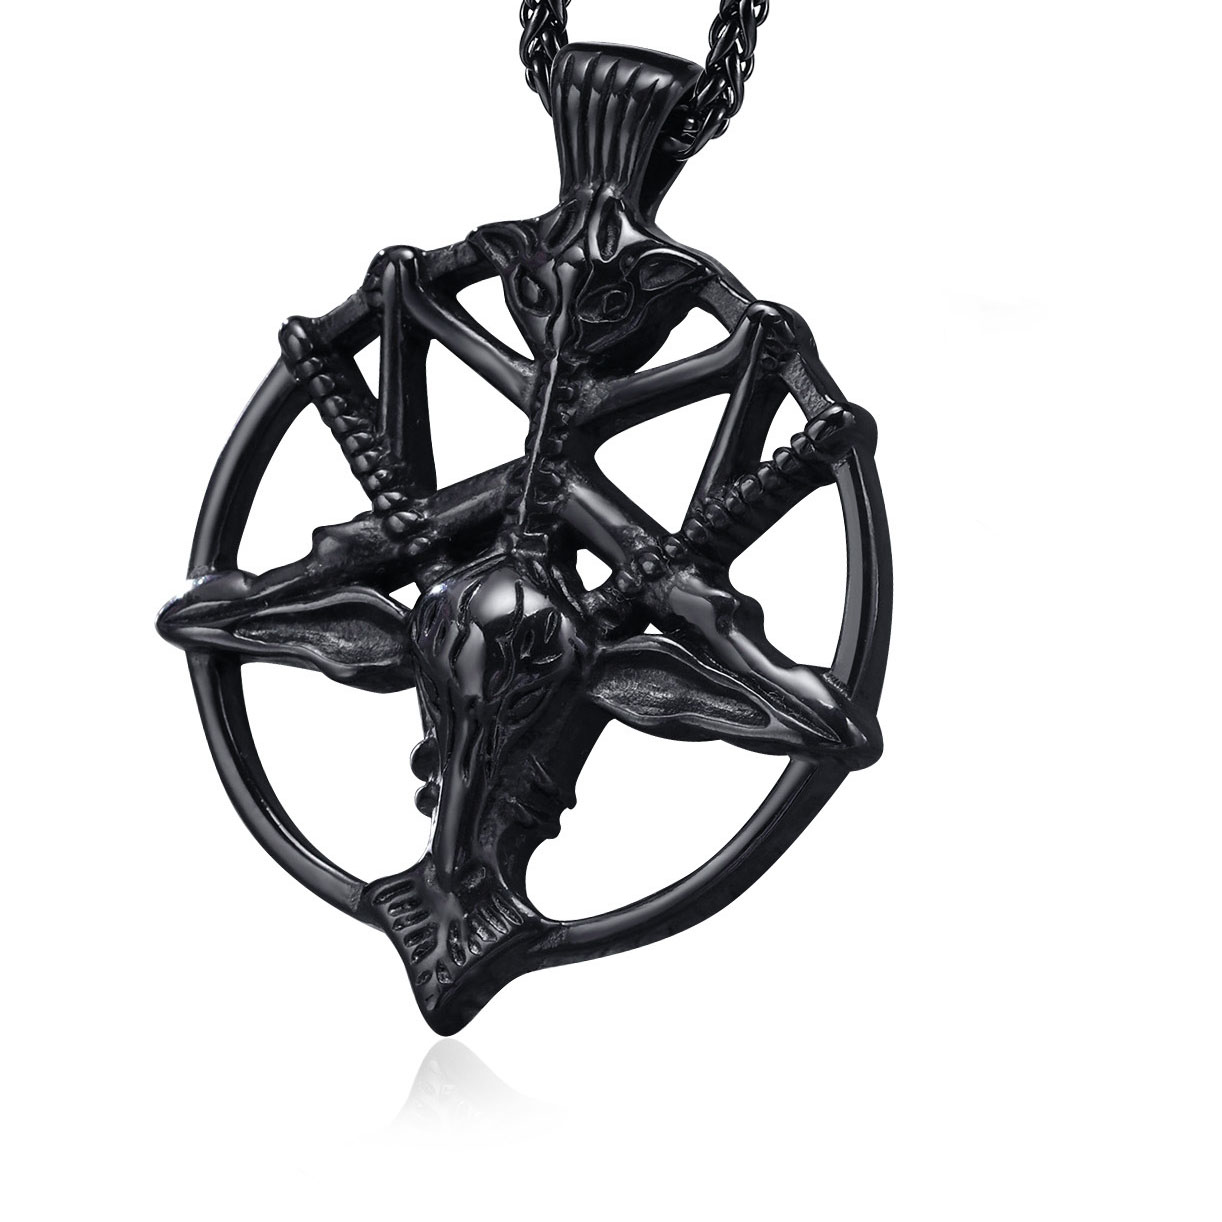 5:Black pendant